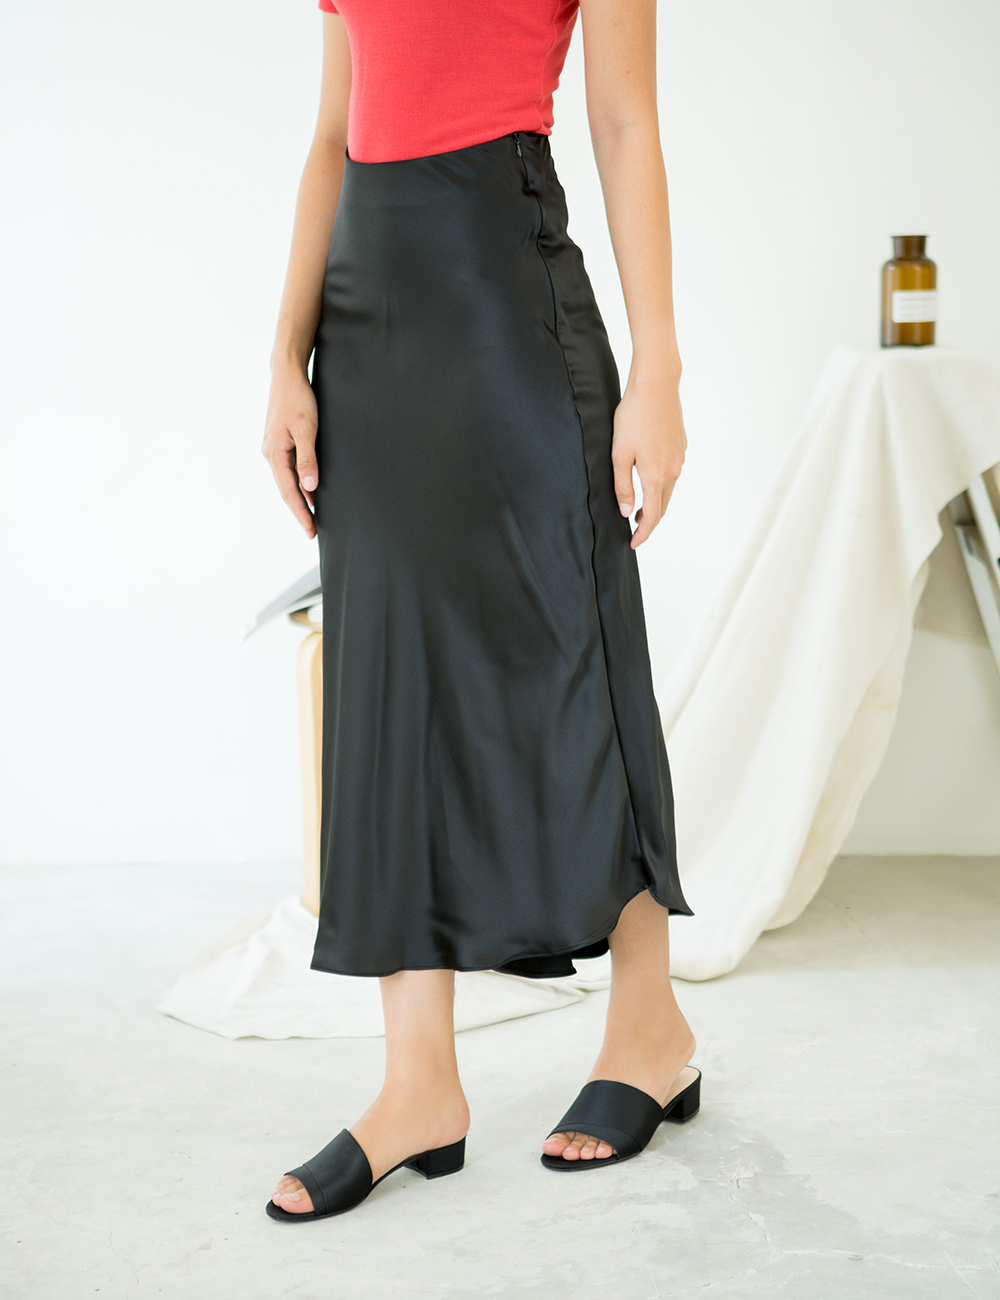 Yuan Market - Satin Finish Skirt